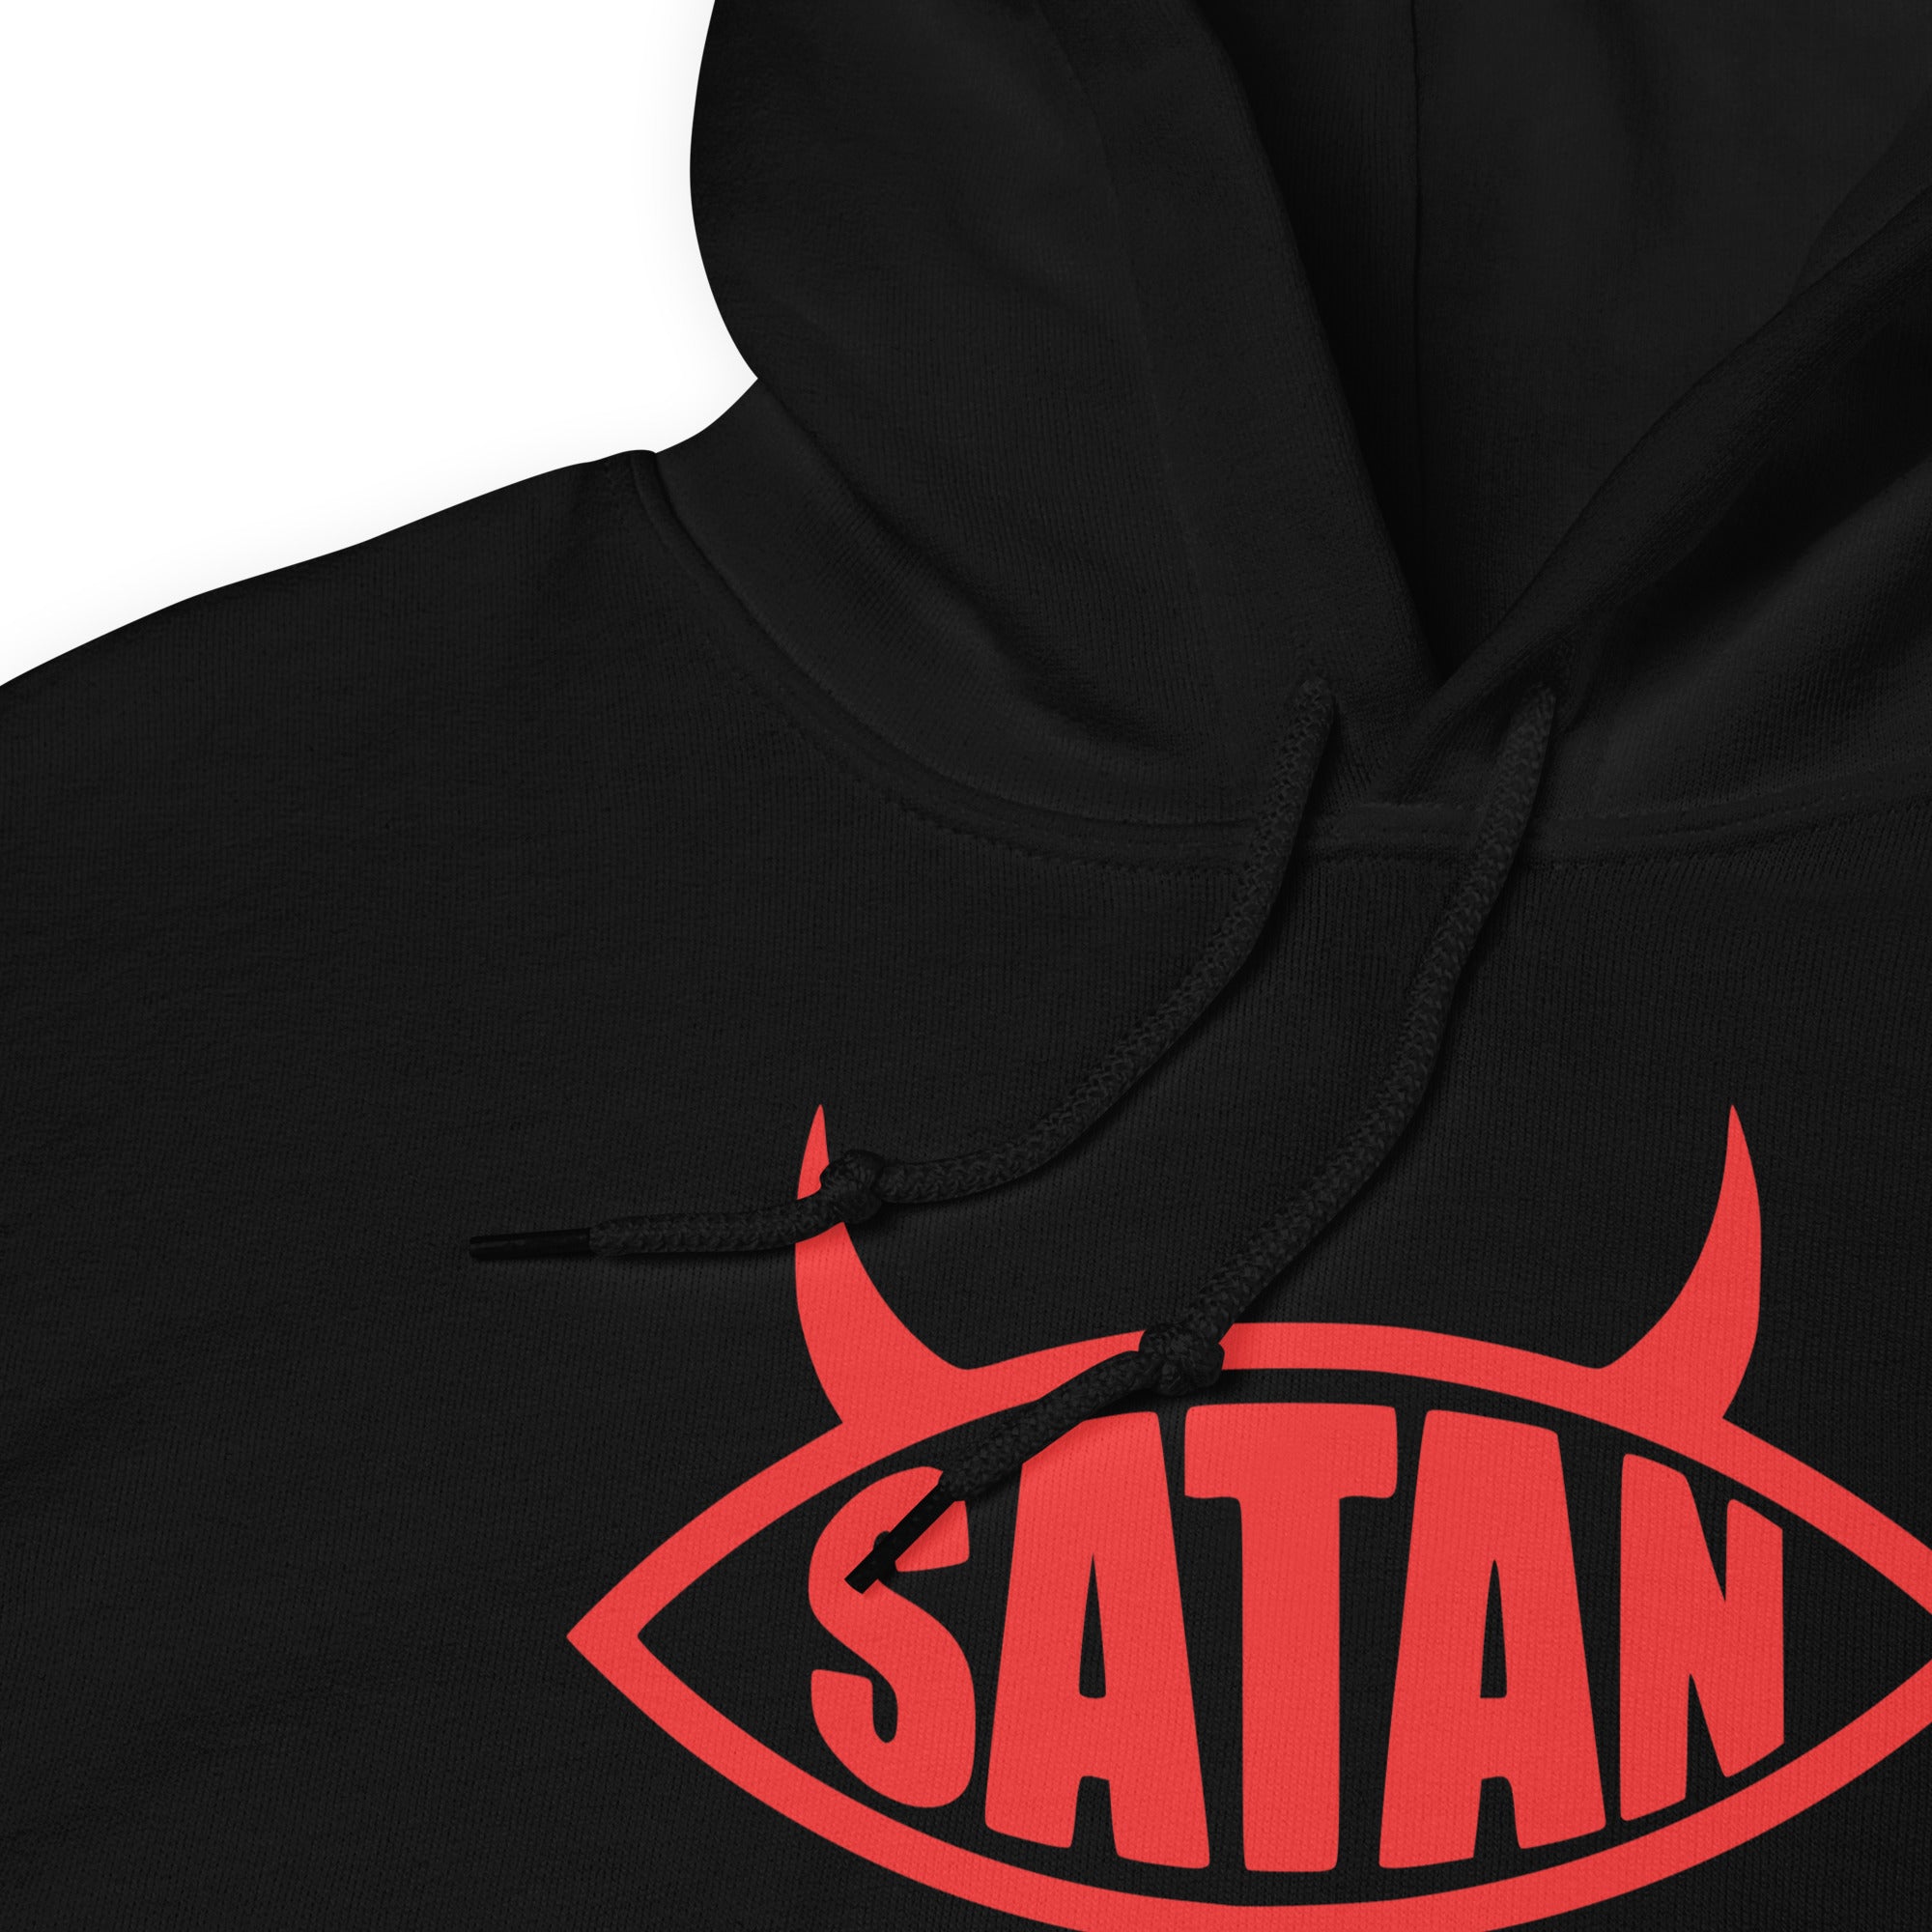 Red Ichthys Satan Fish with Horns Religious Satire Hoodie Sweatshirt